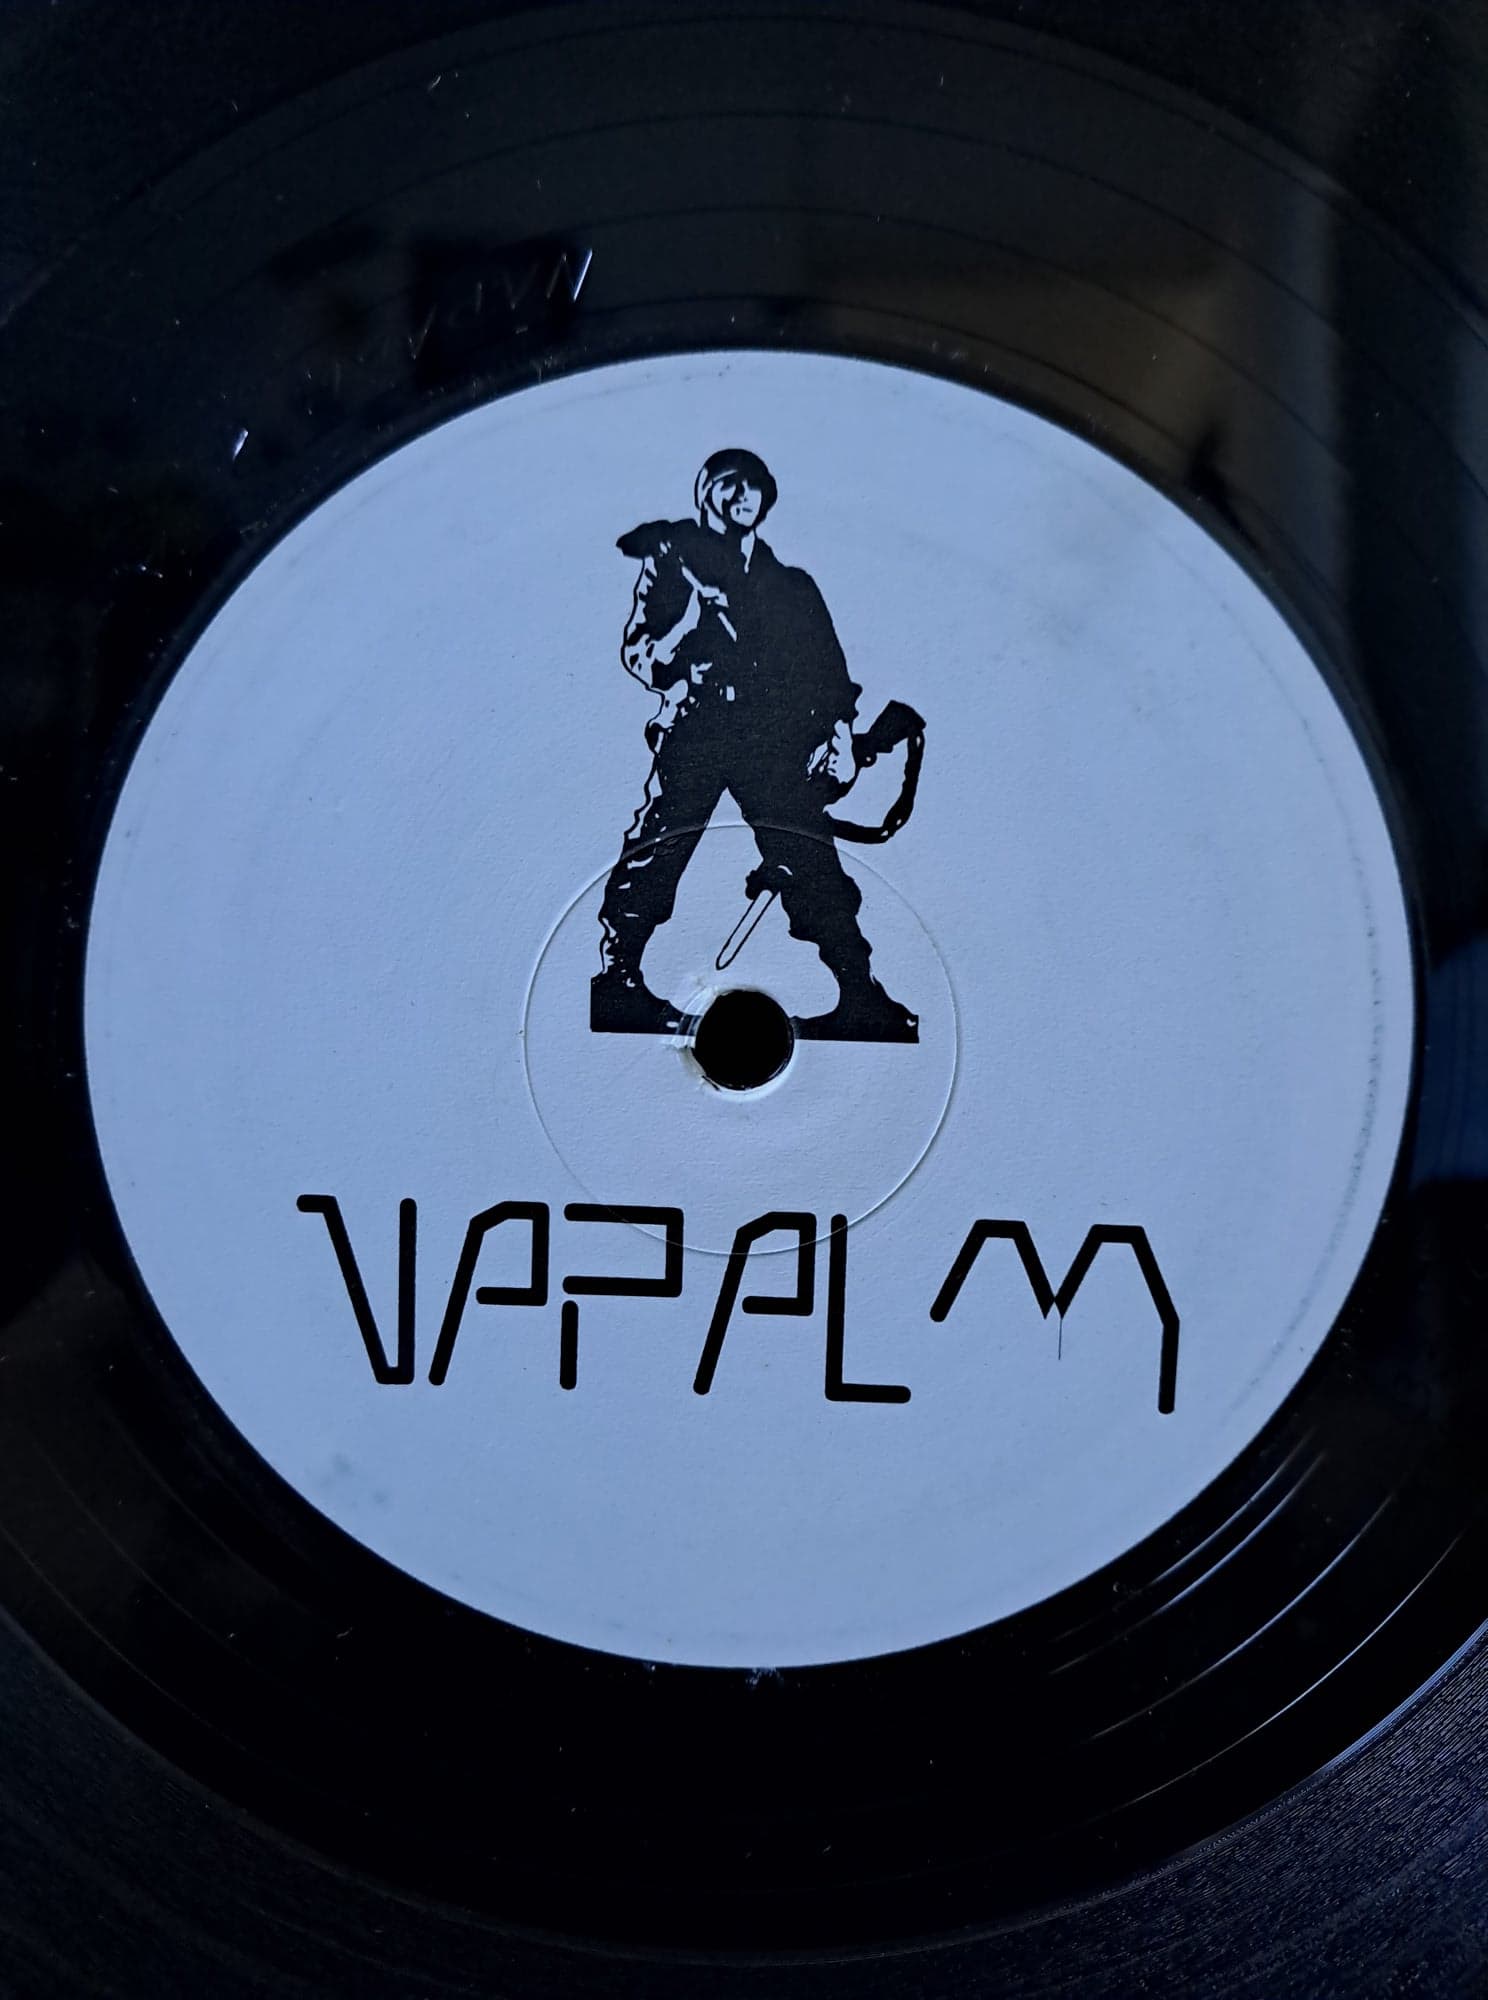 Napalm 02 - vinyle hardcore